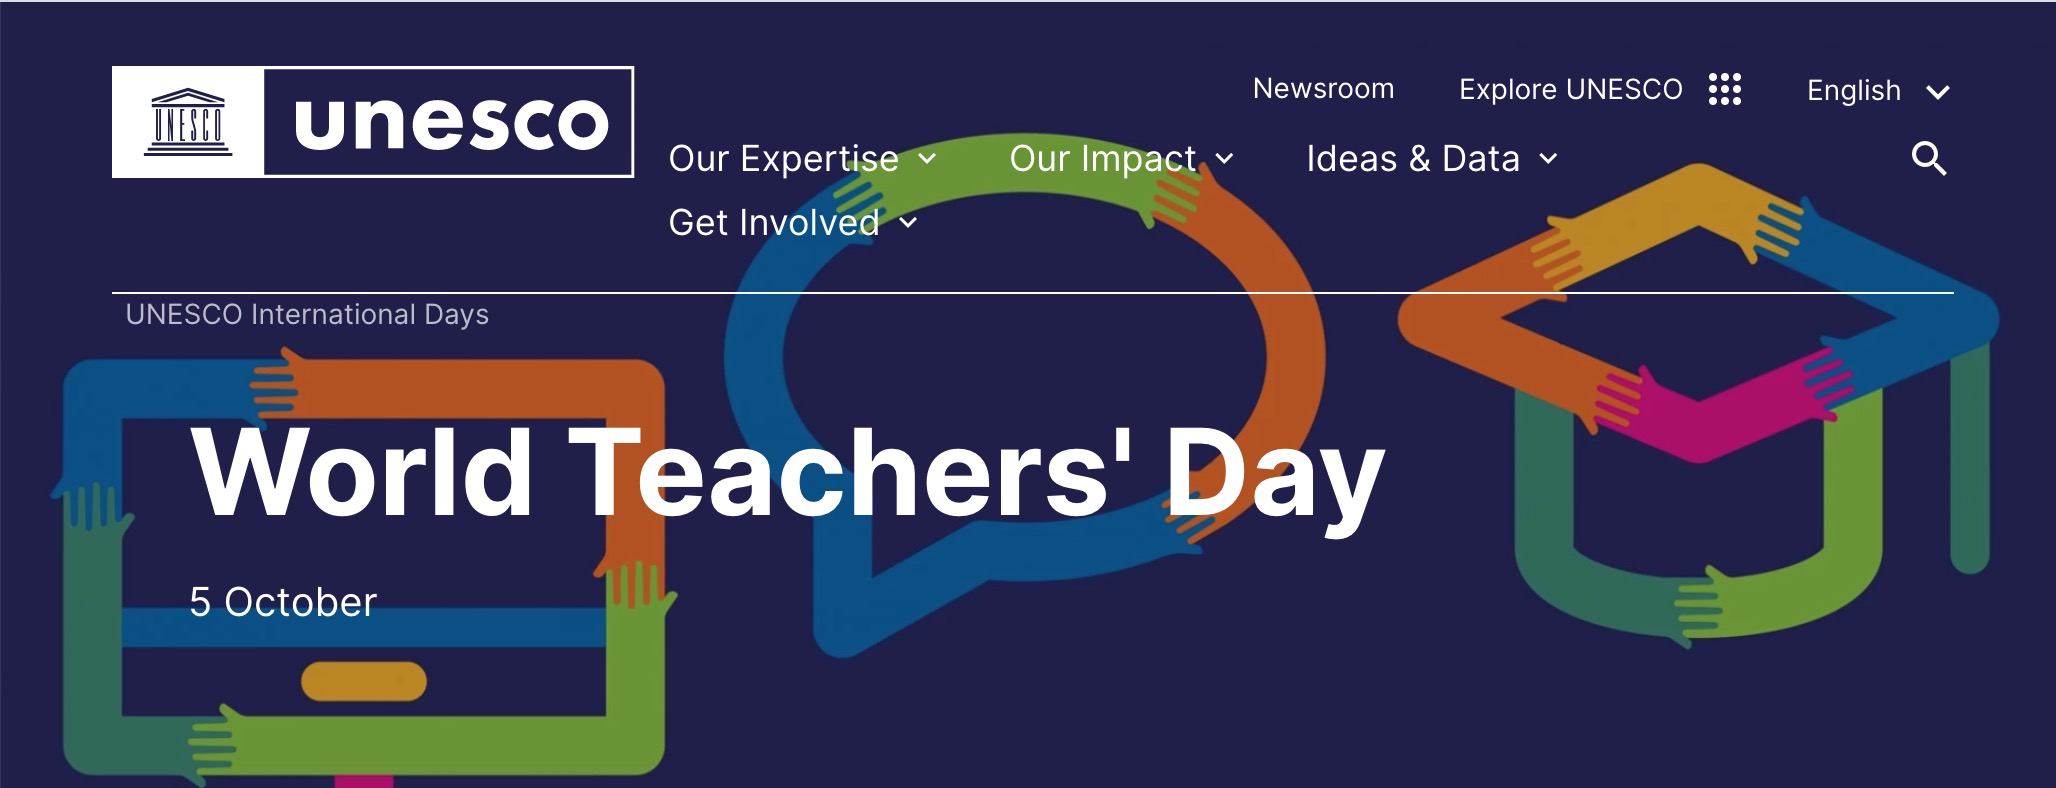 UNESCO web site for World Teachers' Day